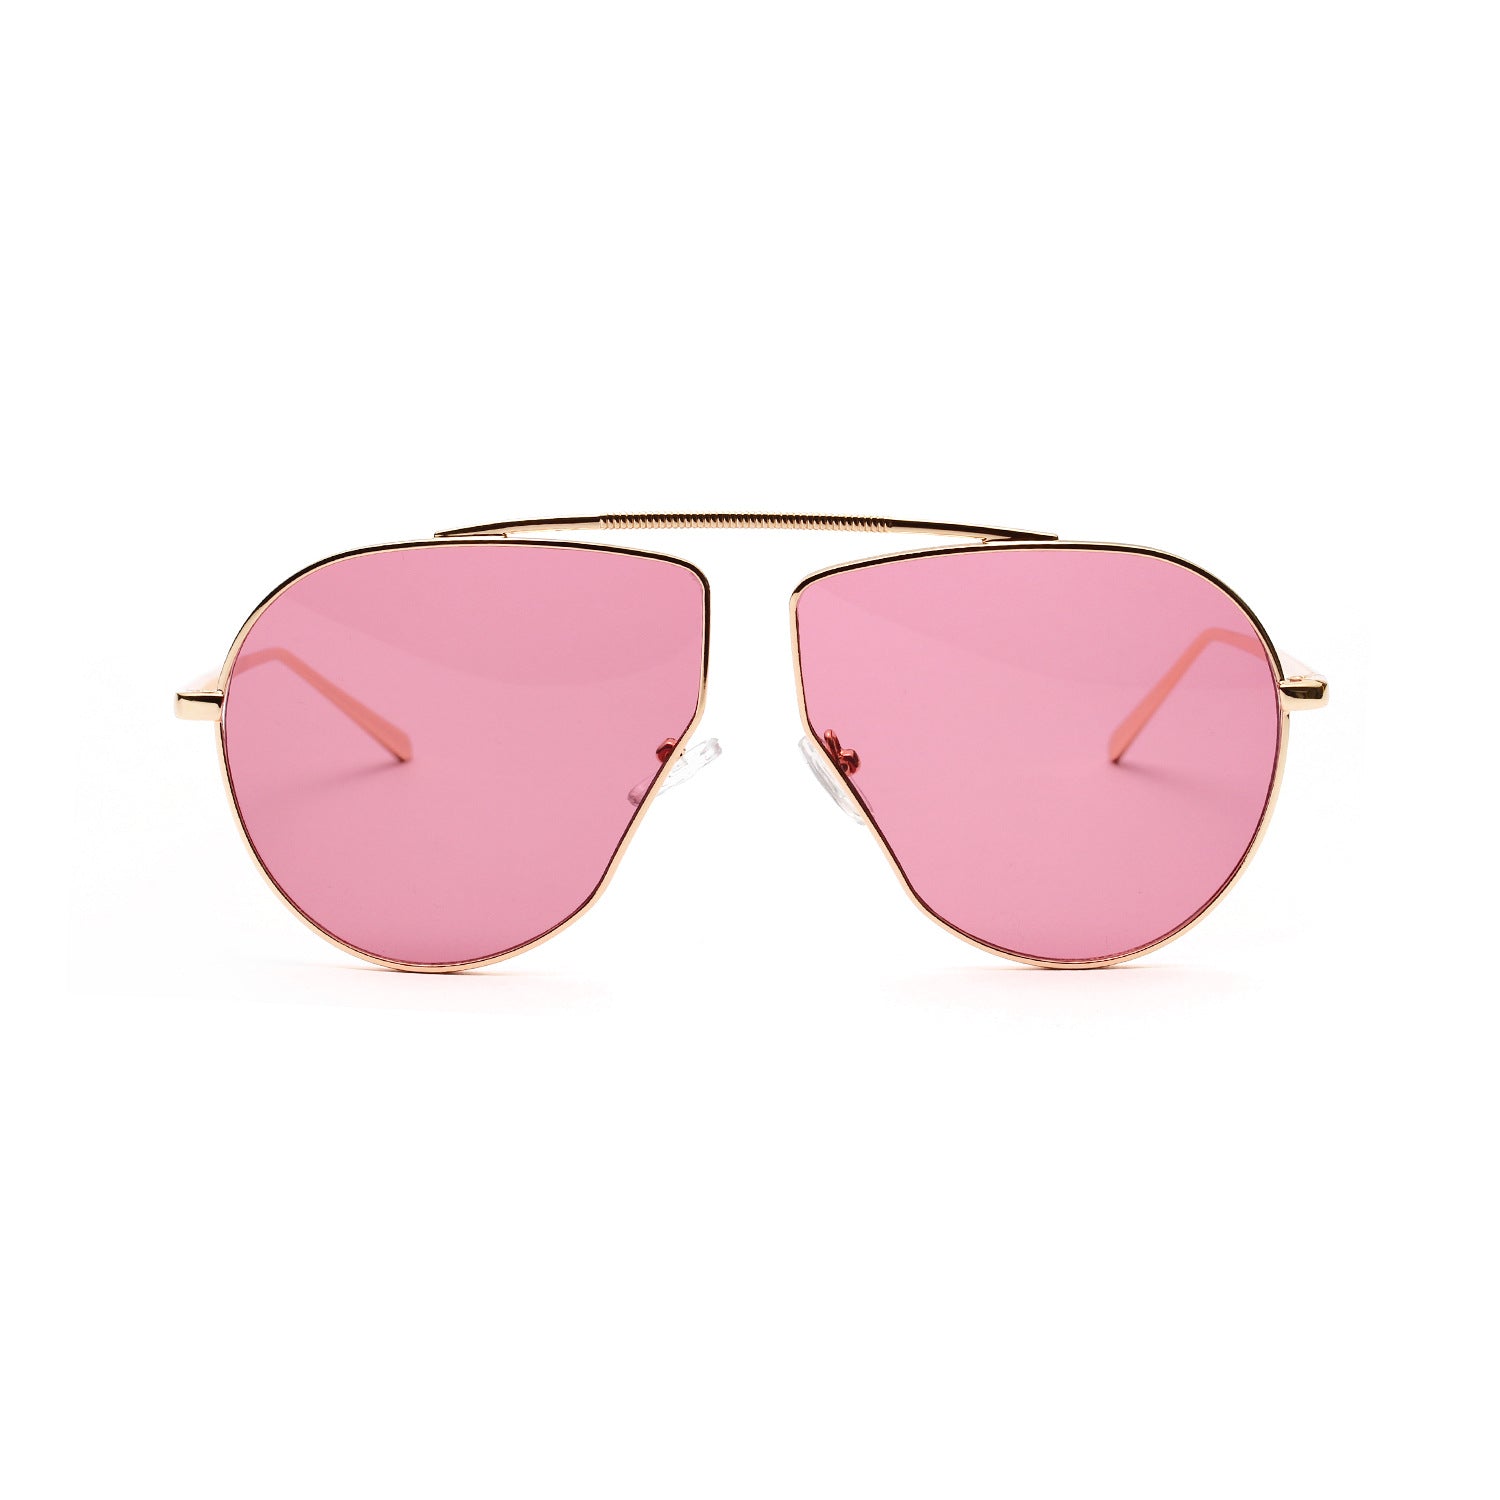 A1166 Polygonal Big Frame Sunglasses, Metal Frame Sunglasses For Women - ladieskits